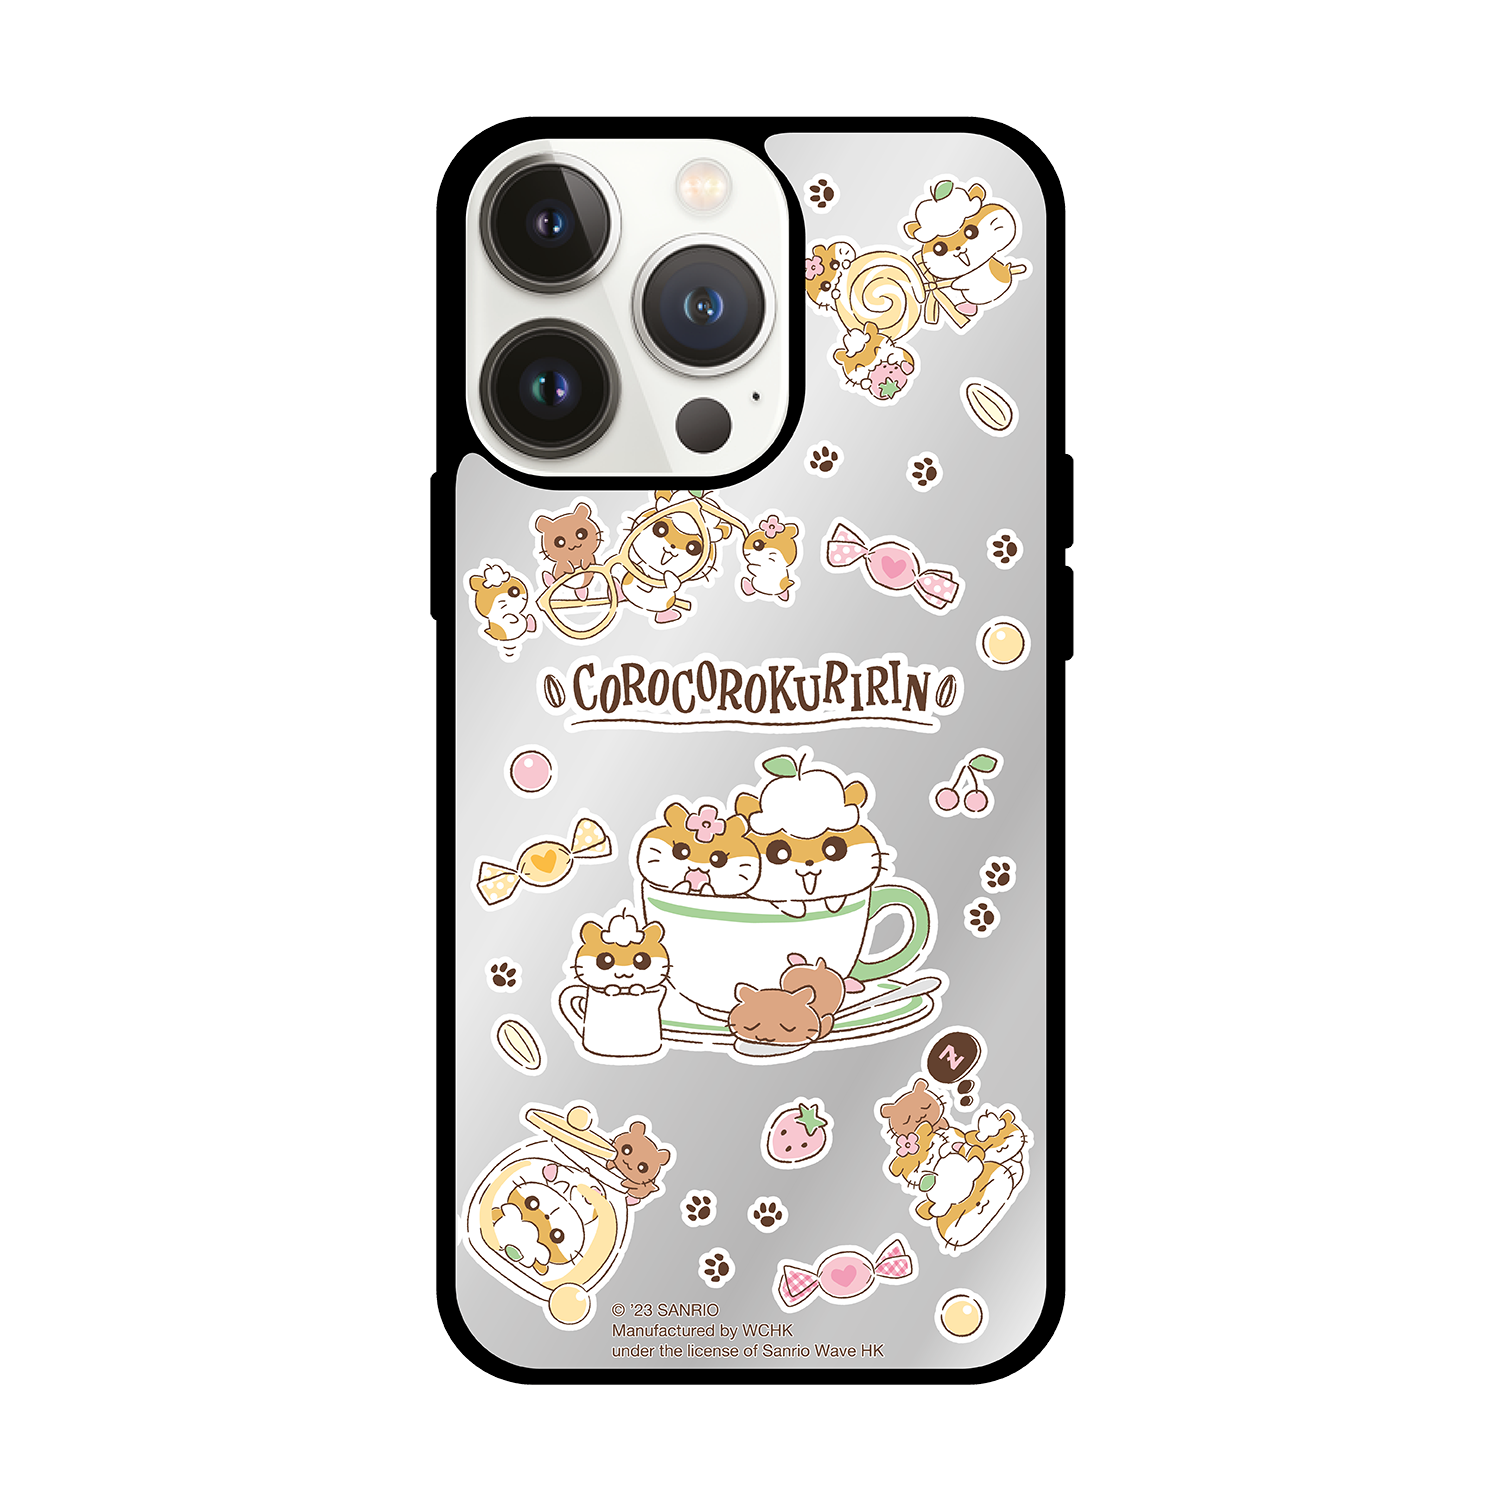 CoroCoroKuririn iPhone Mirror Case / Samsung Mirror Case (CK101M)